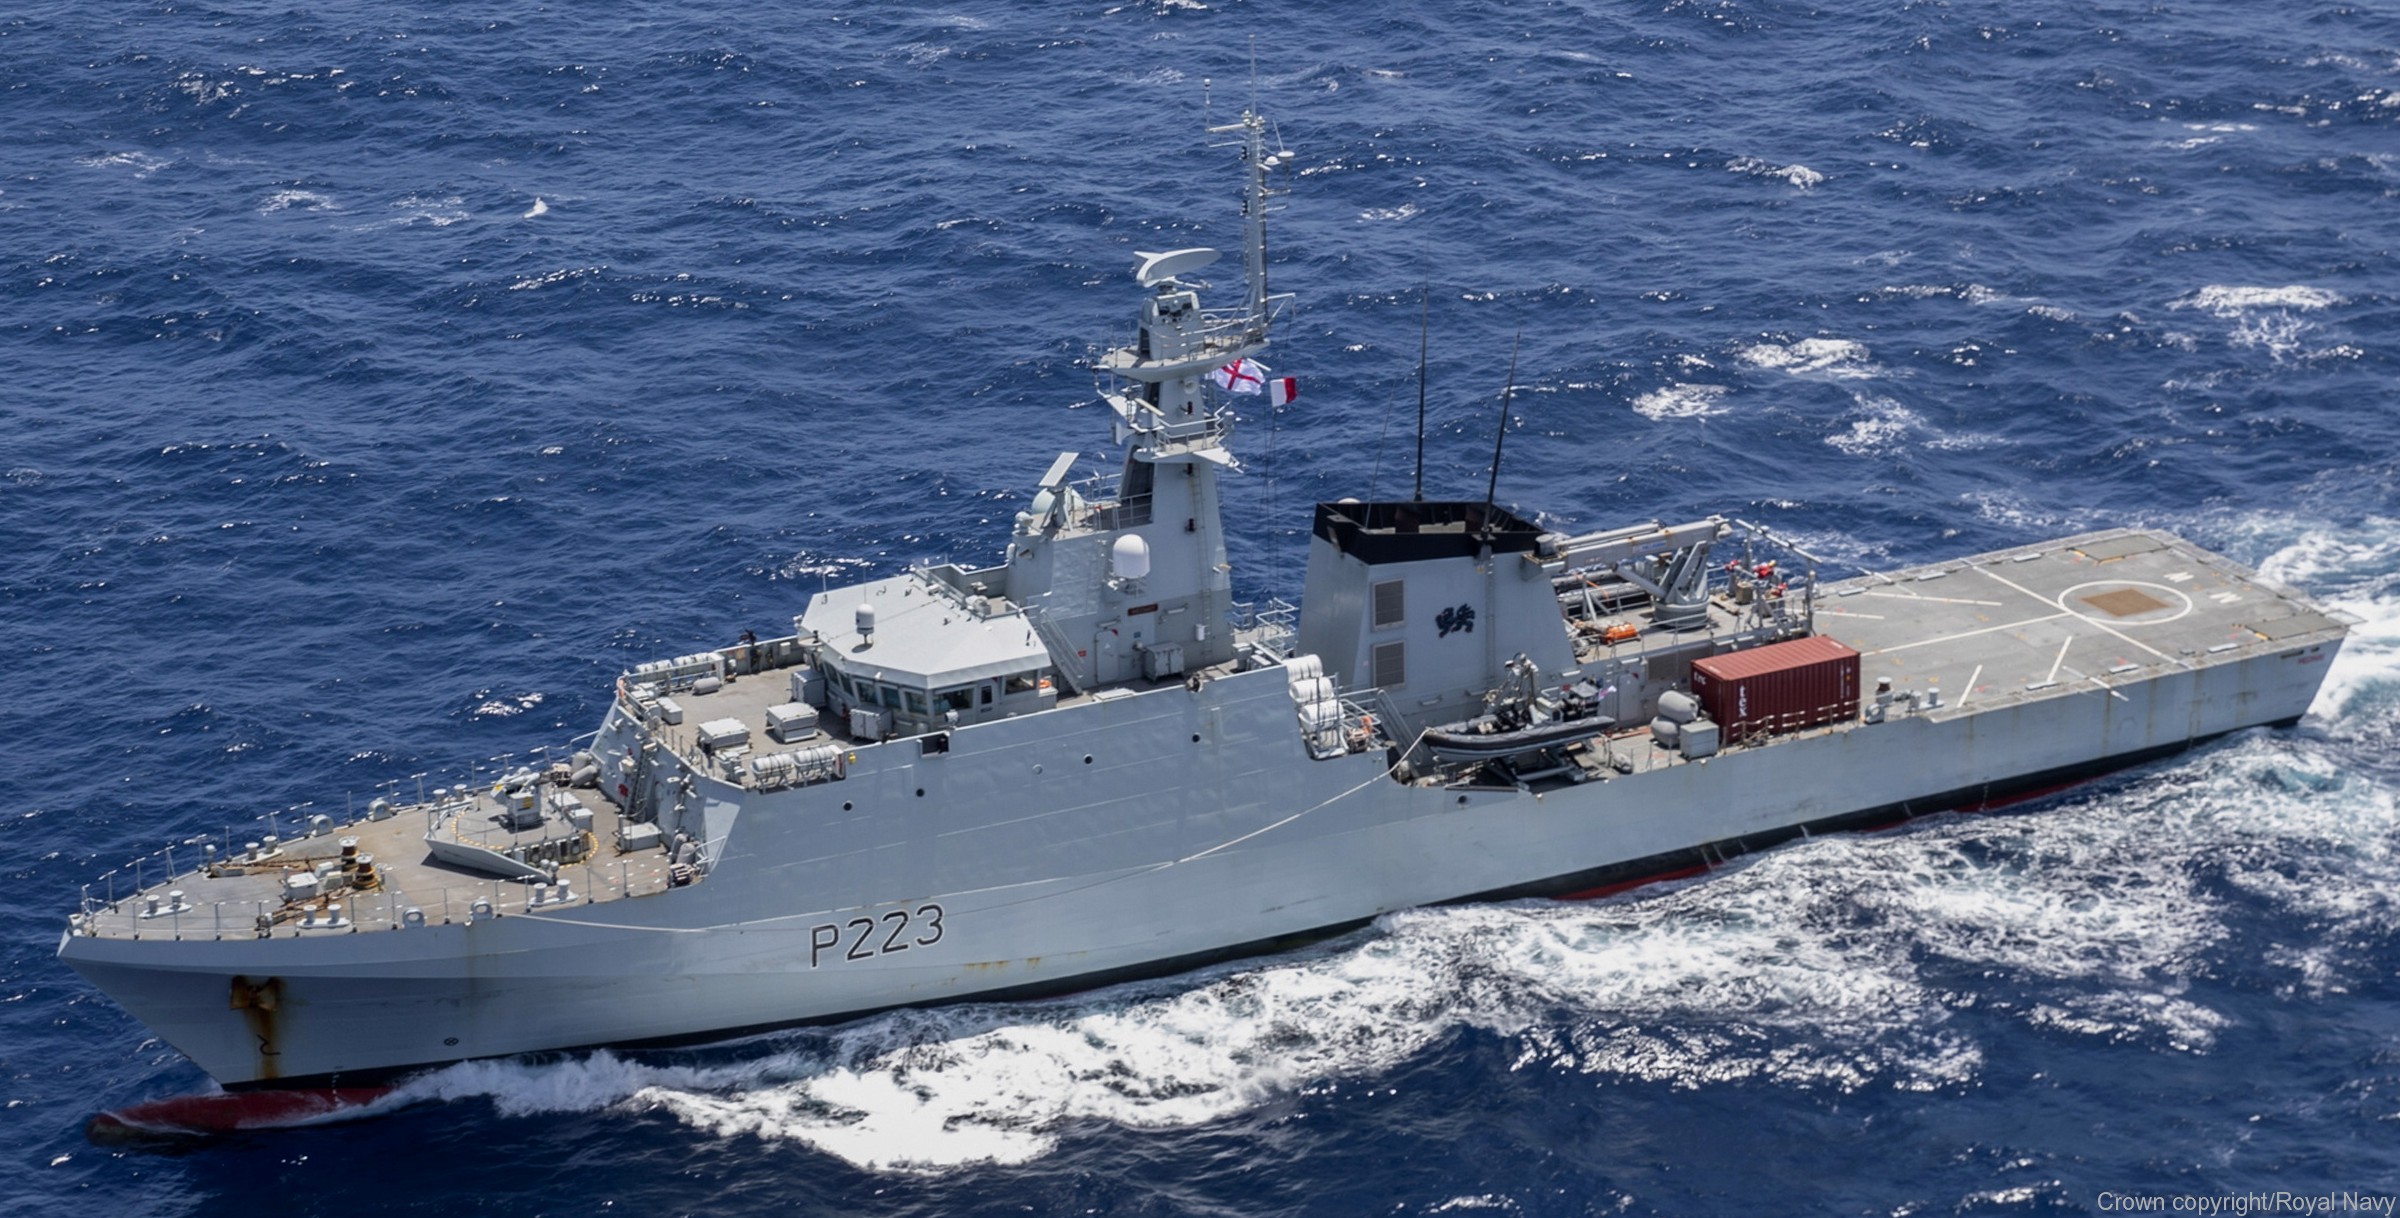 p223 hms medway river class offshore patrol vessel opv royal navy 19